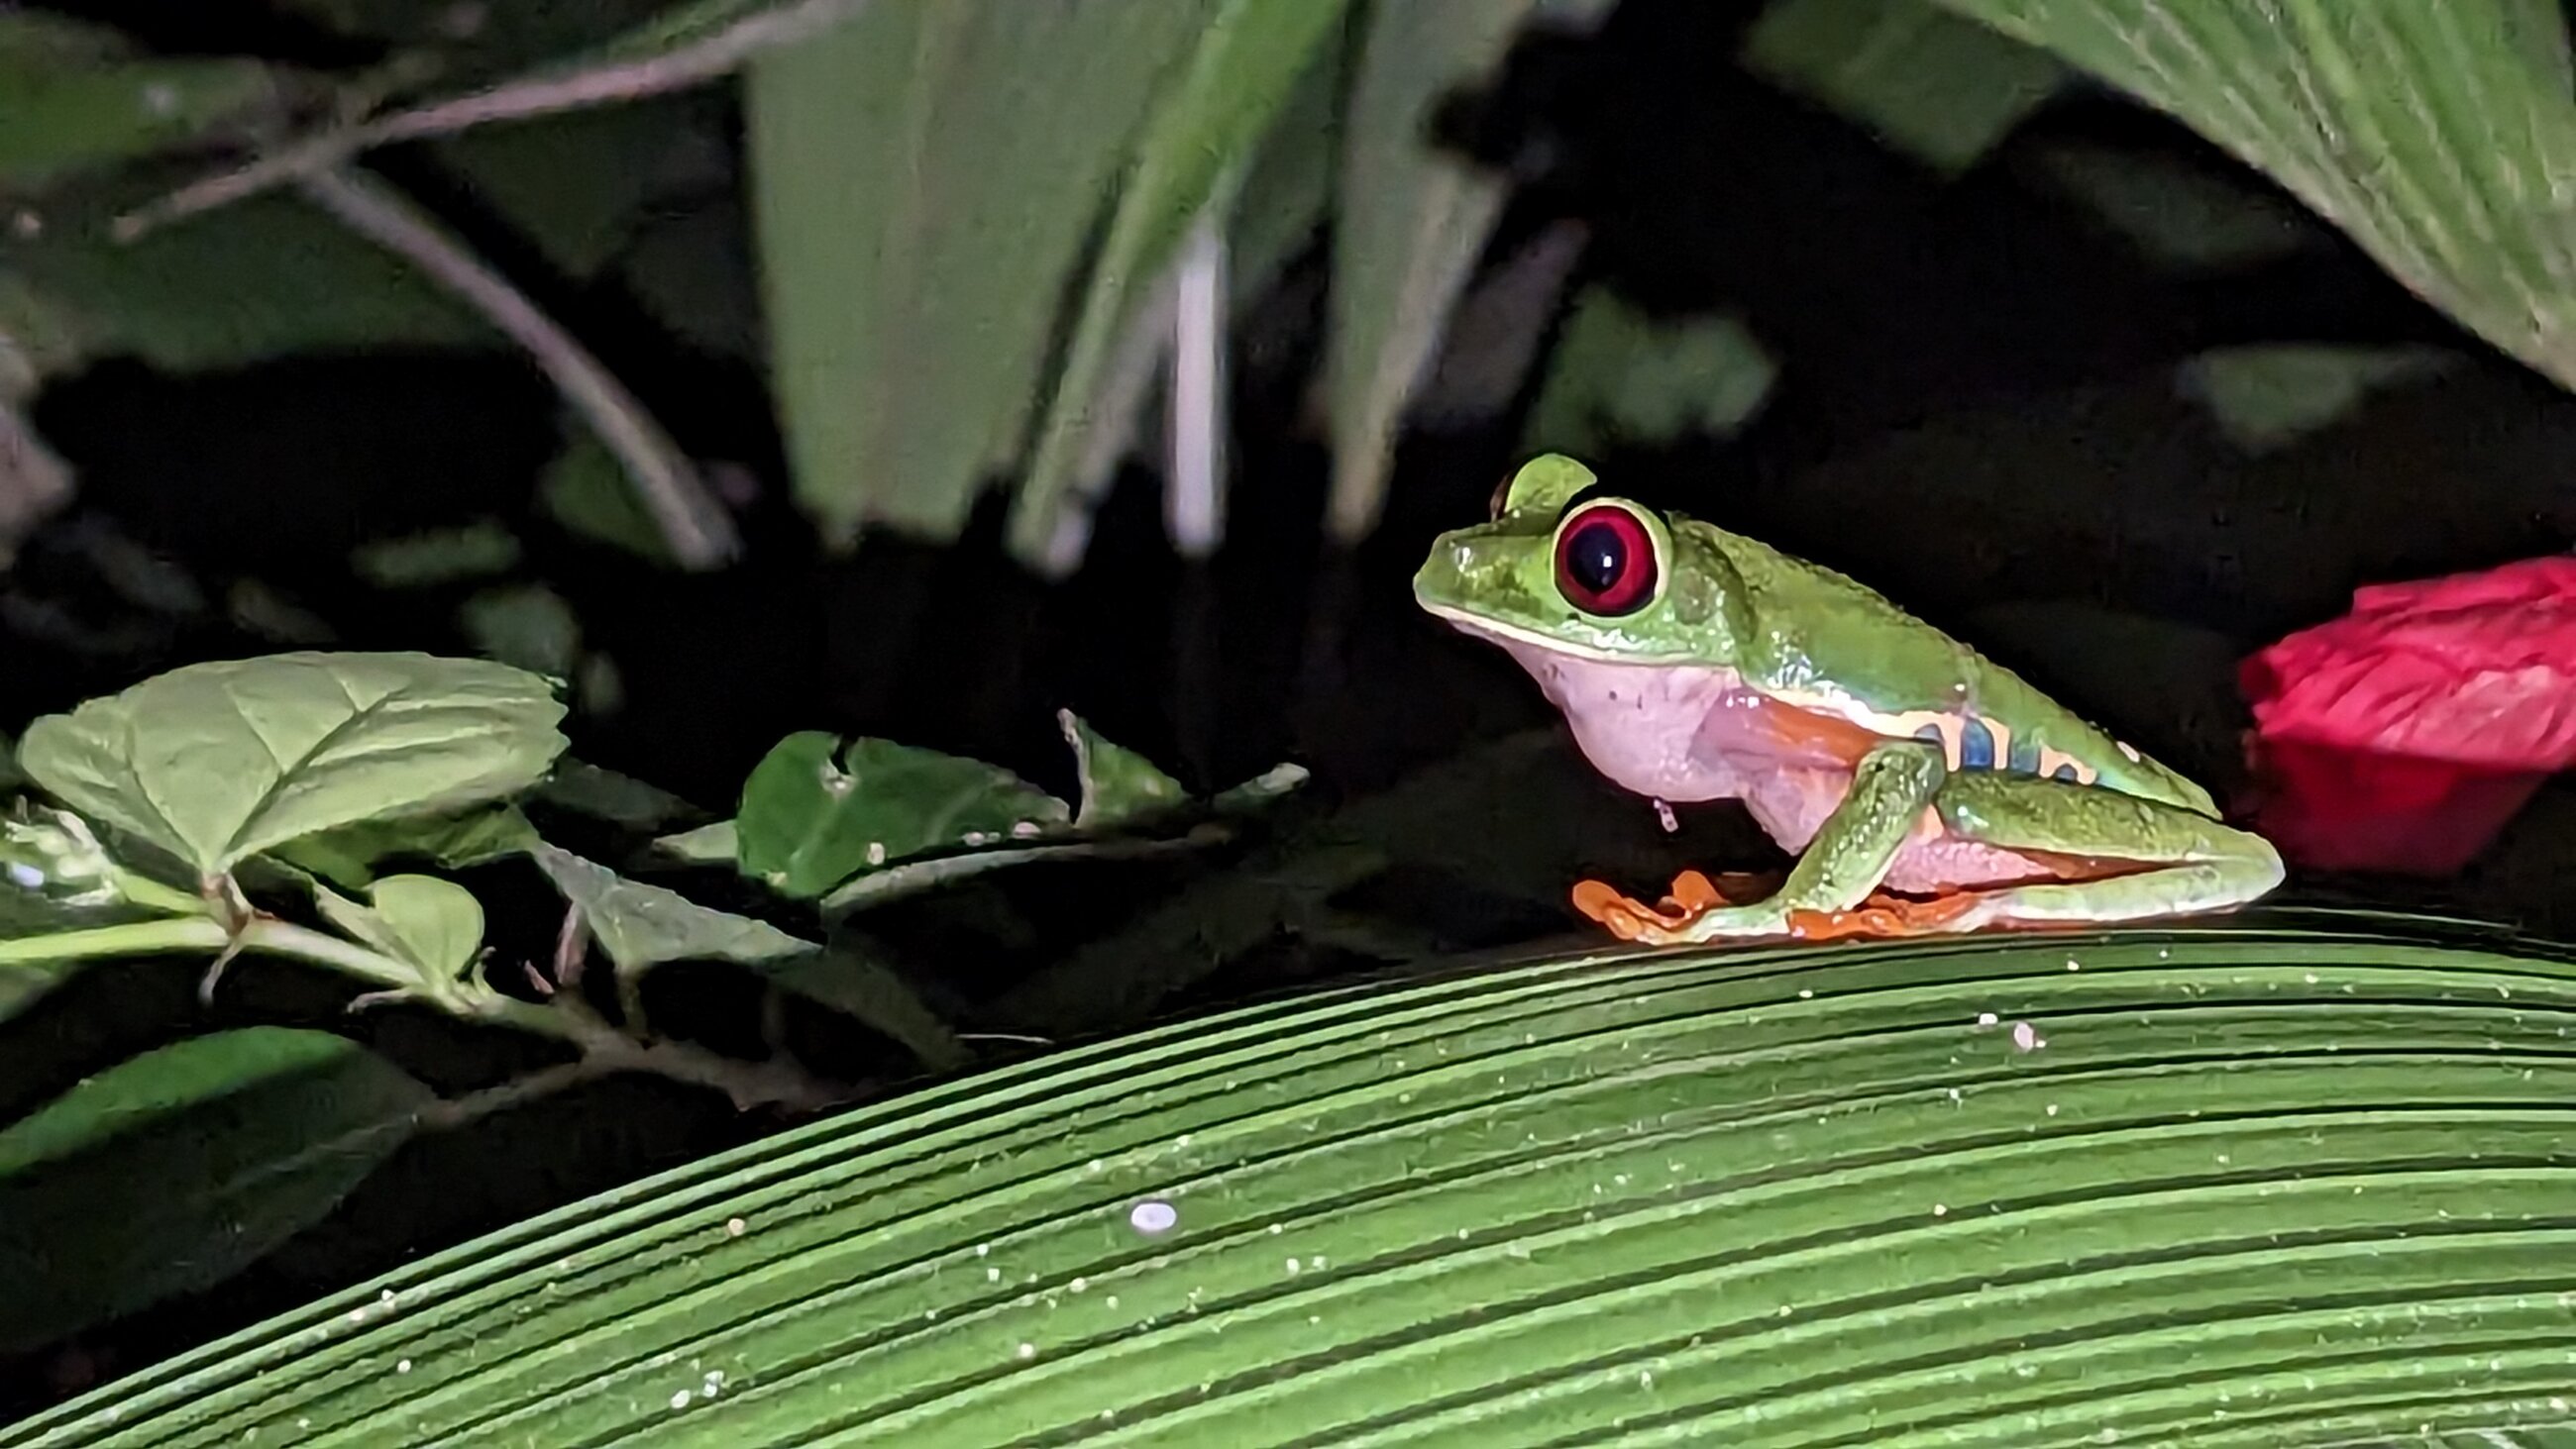 Agalychnis callidryas aka the Red-eyed Tree Frog